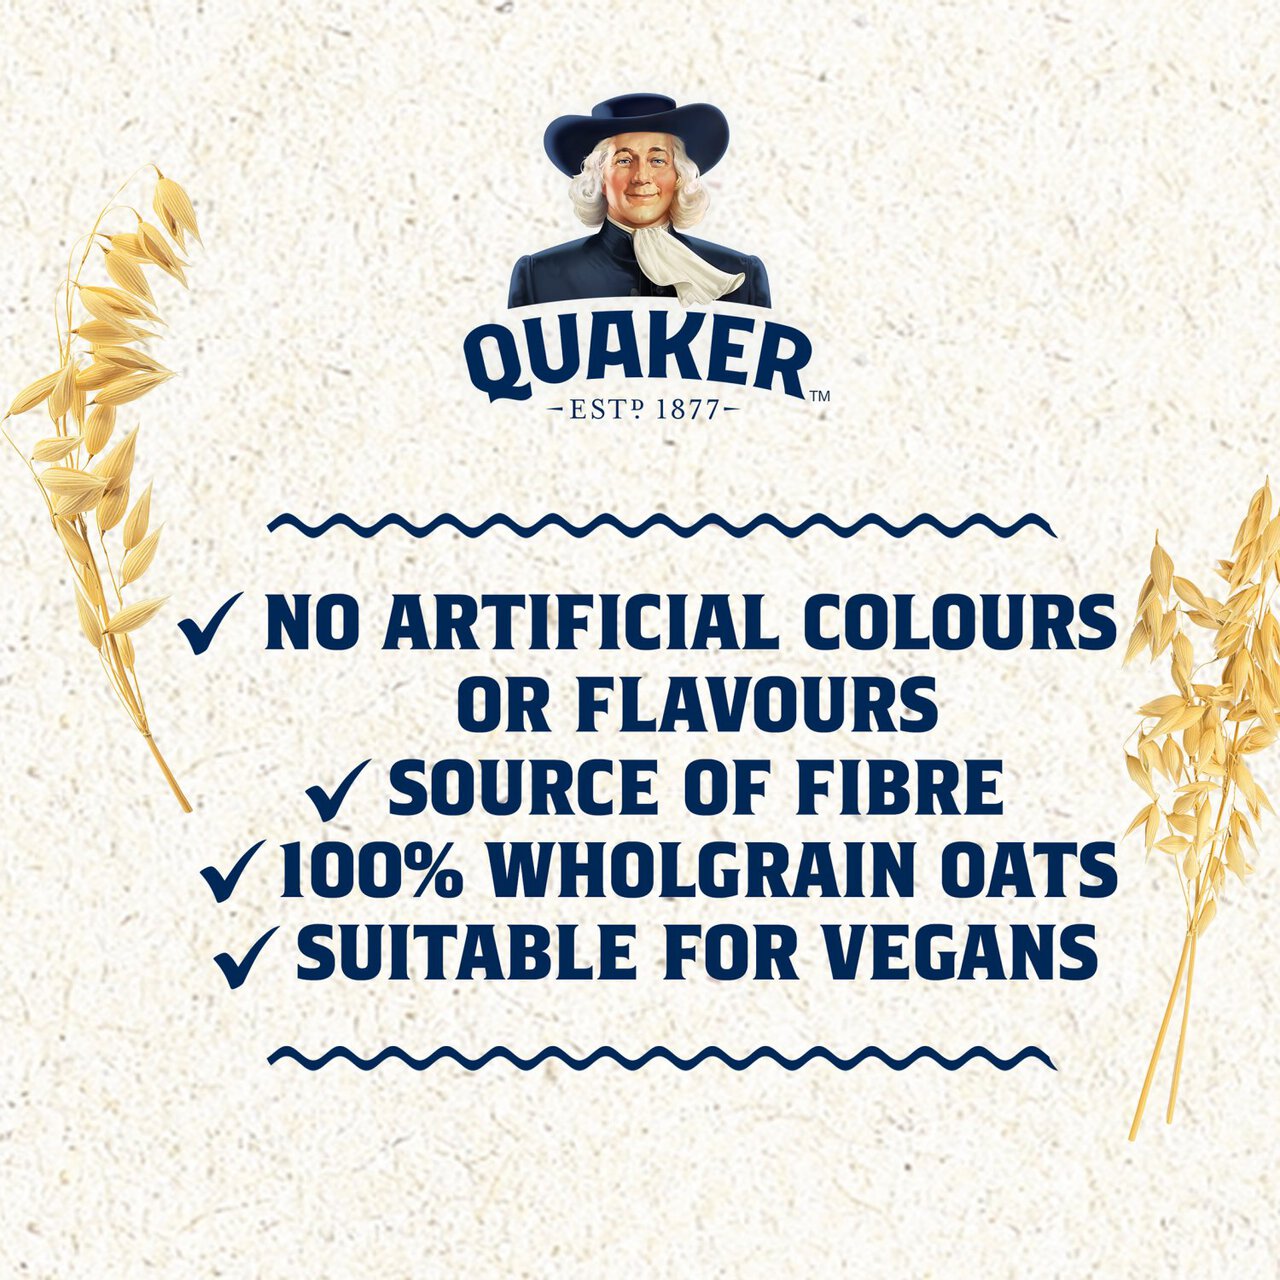 Quaker Oats Jumbo Rolled Oats Porridge Cereal 1kg